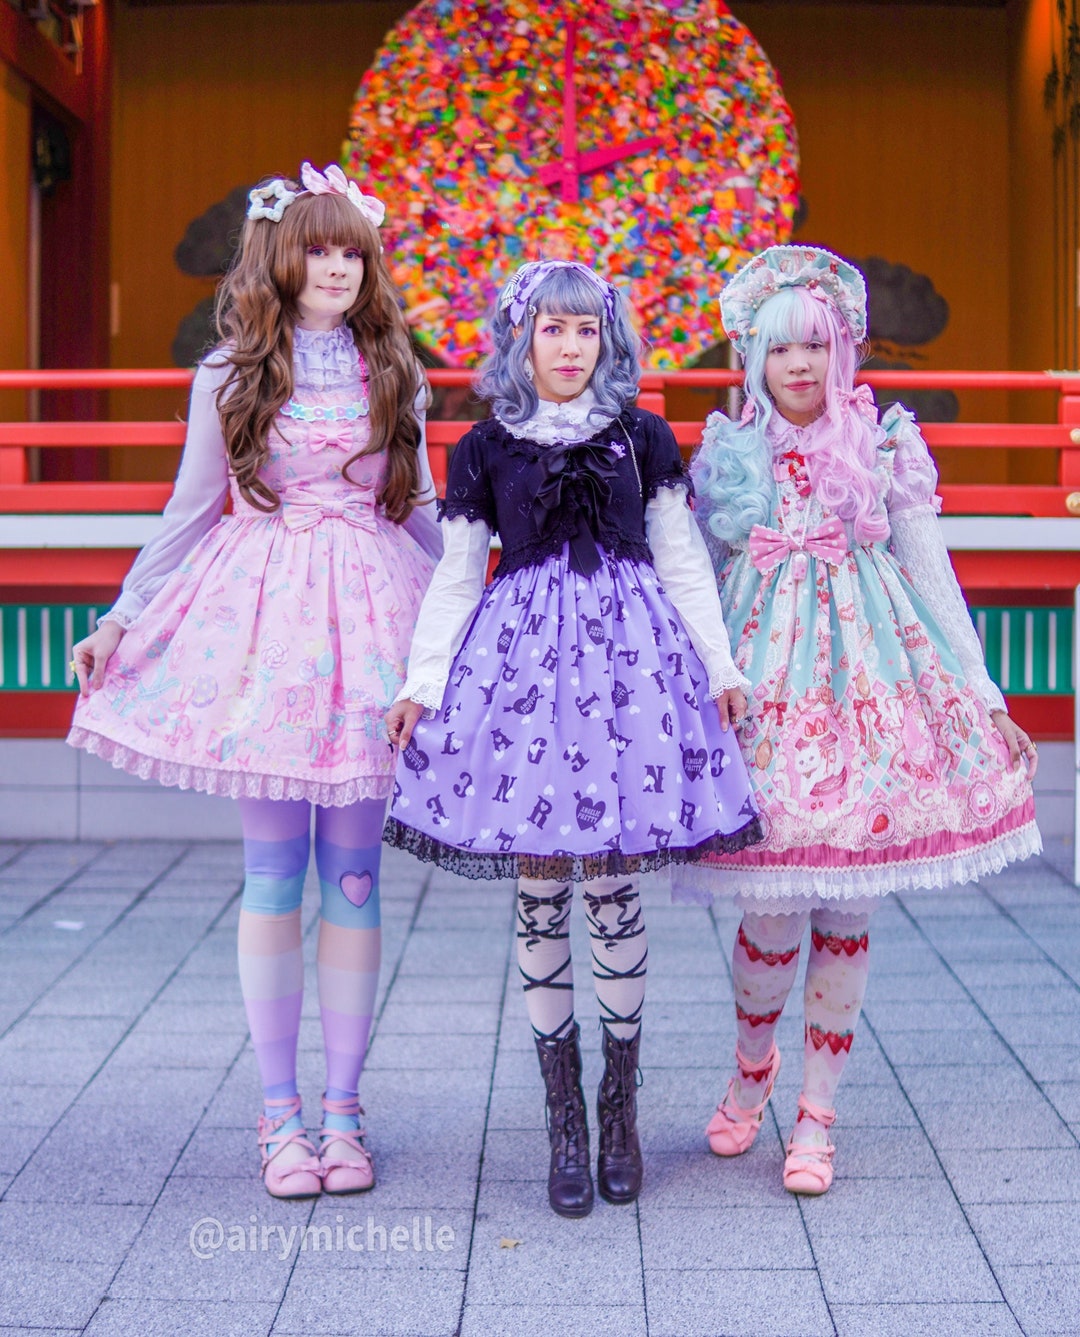 Pastel Rainbow Stripe Star Candy Girl Skirt Fairy Kei Sweet Pop